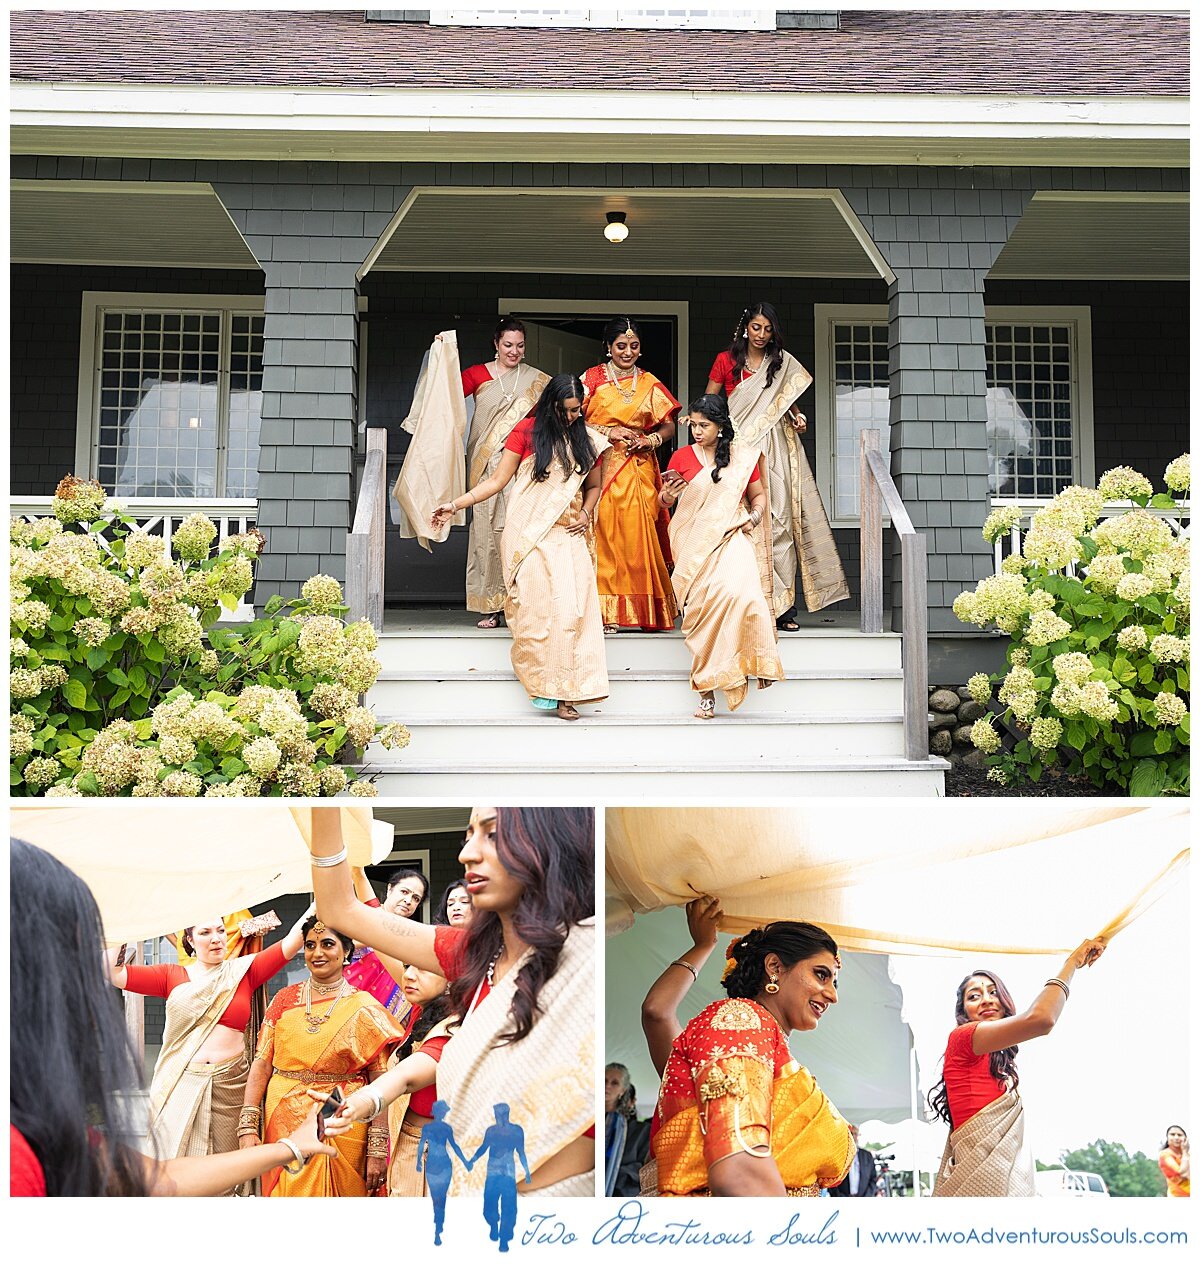 Scotland Fields Wedding, Maine Hindu Wedding Photographers, Two Adventurous Souls - 090521_0067.jpg